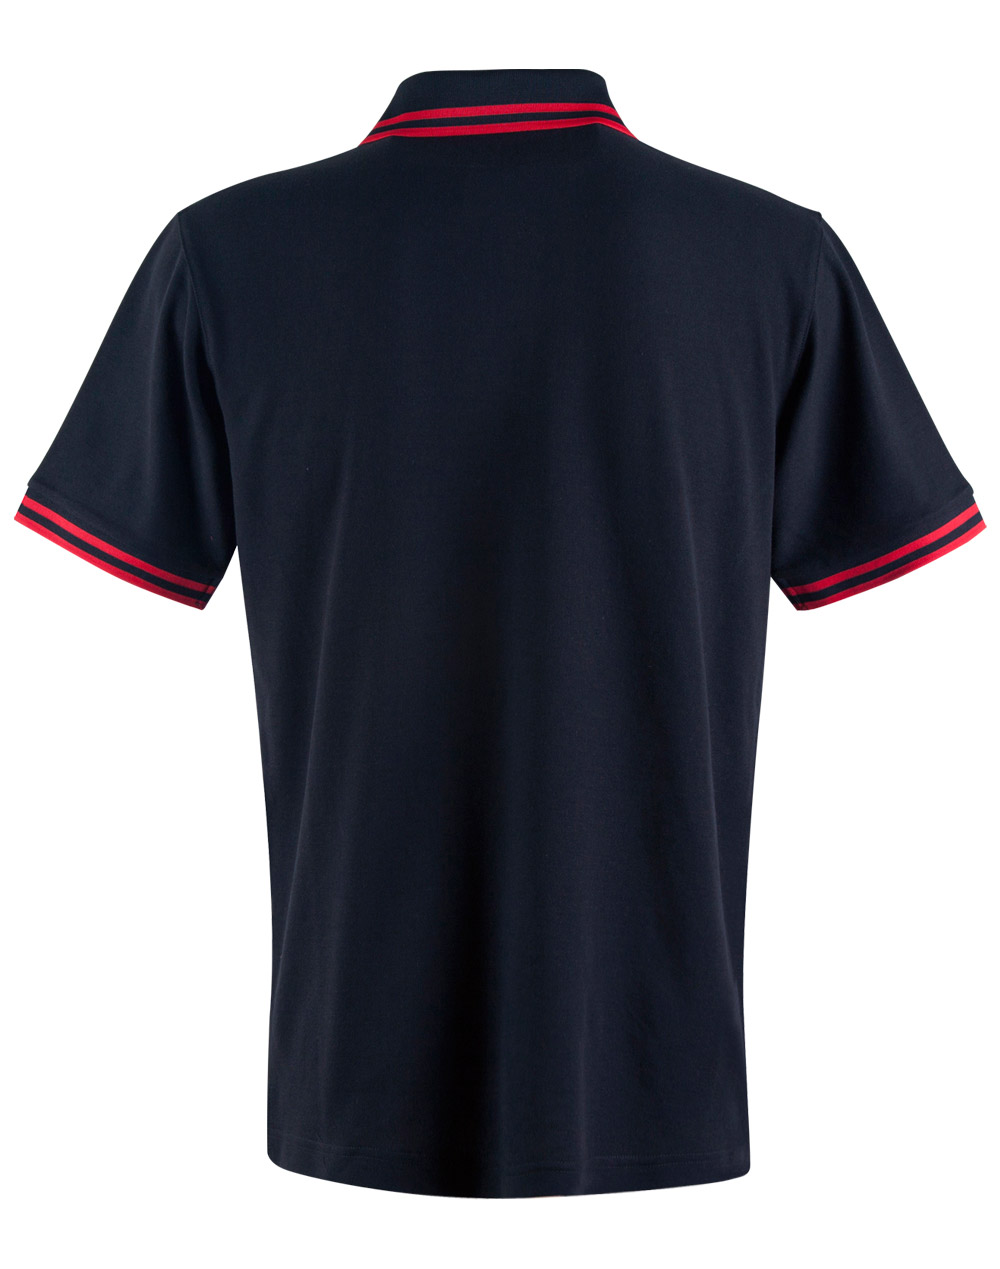 Custom Mens Black Red Grace Pique Polo Shirt Online Perth Australia